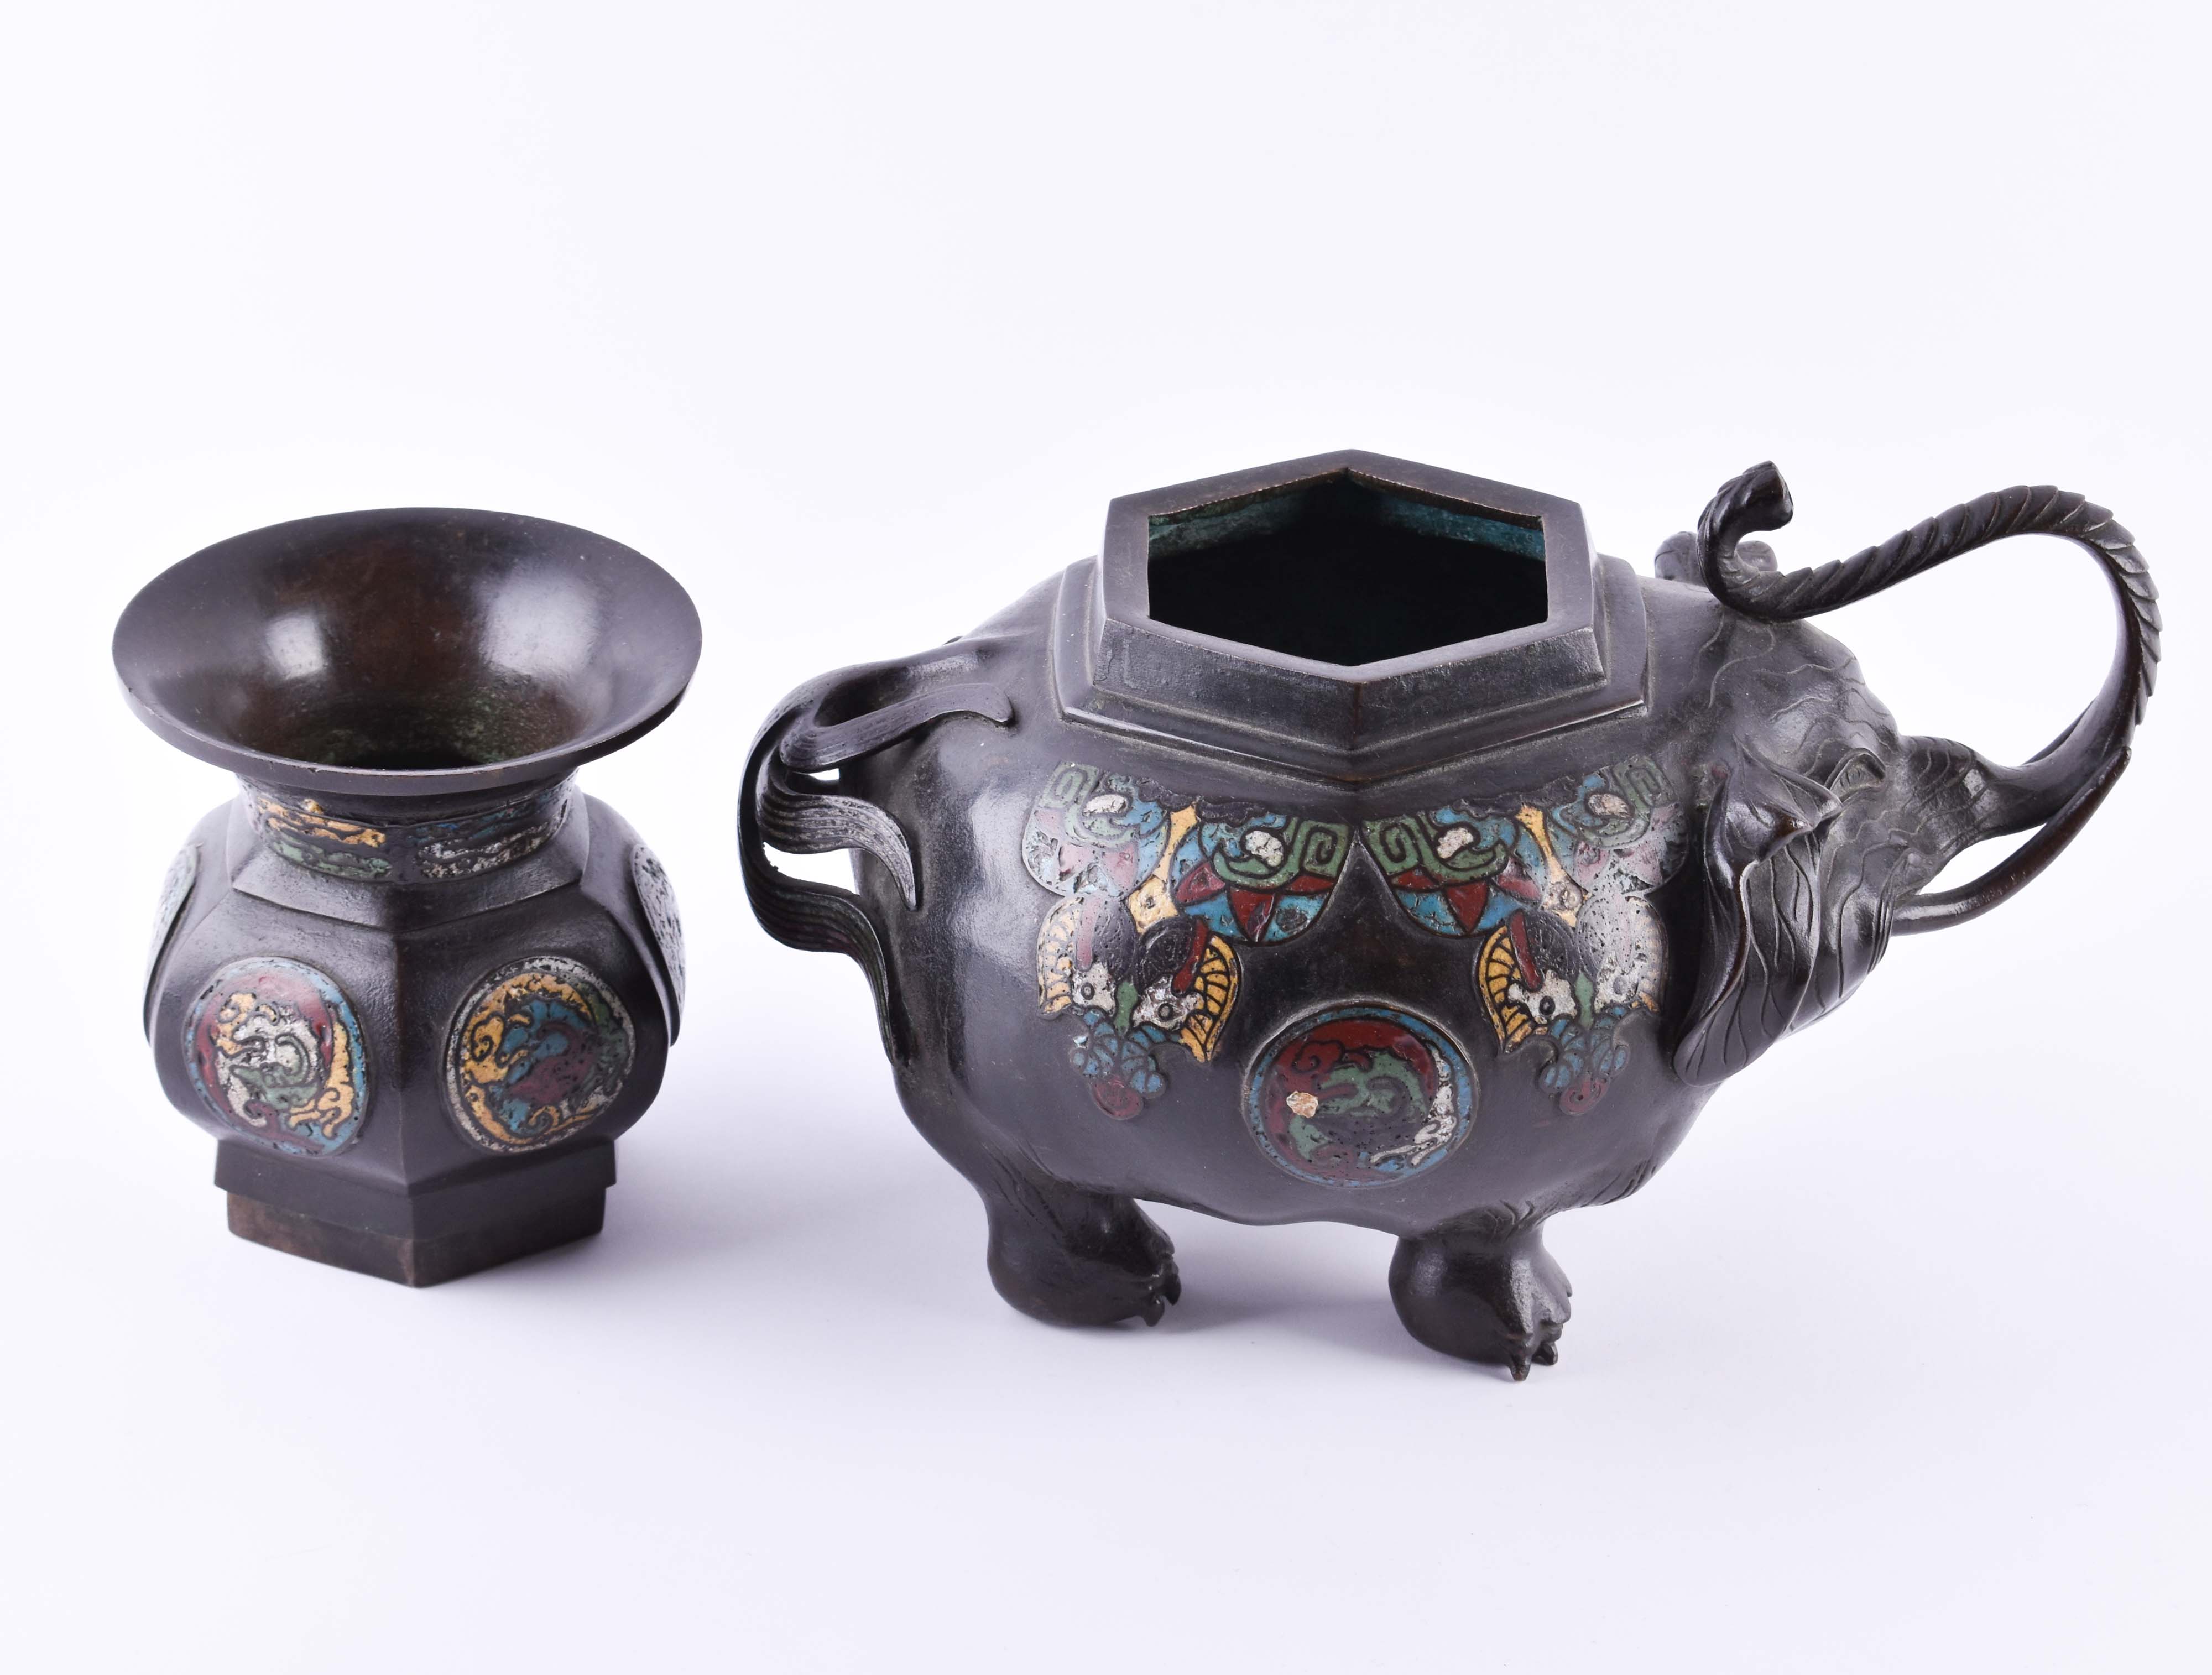  Figurative cloisonne Koro China Qing dynasty - Image 10 of 10